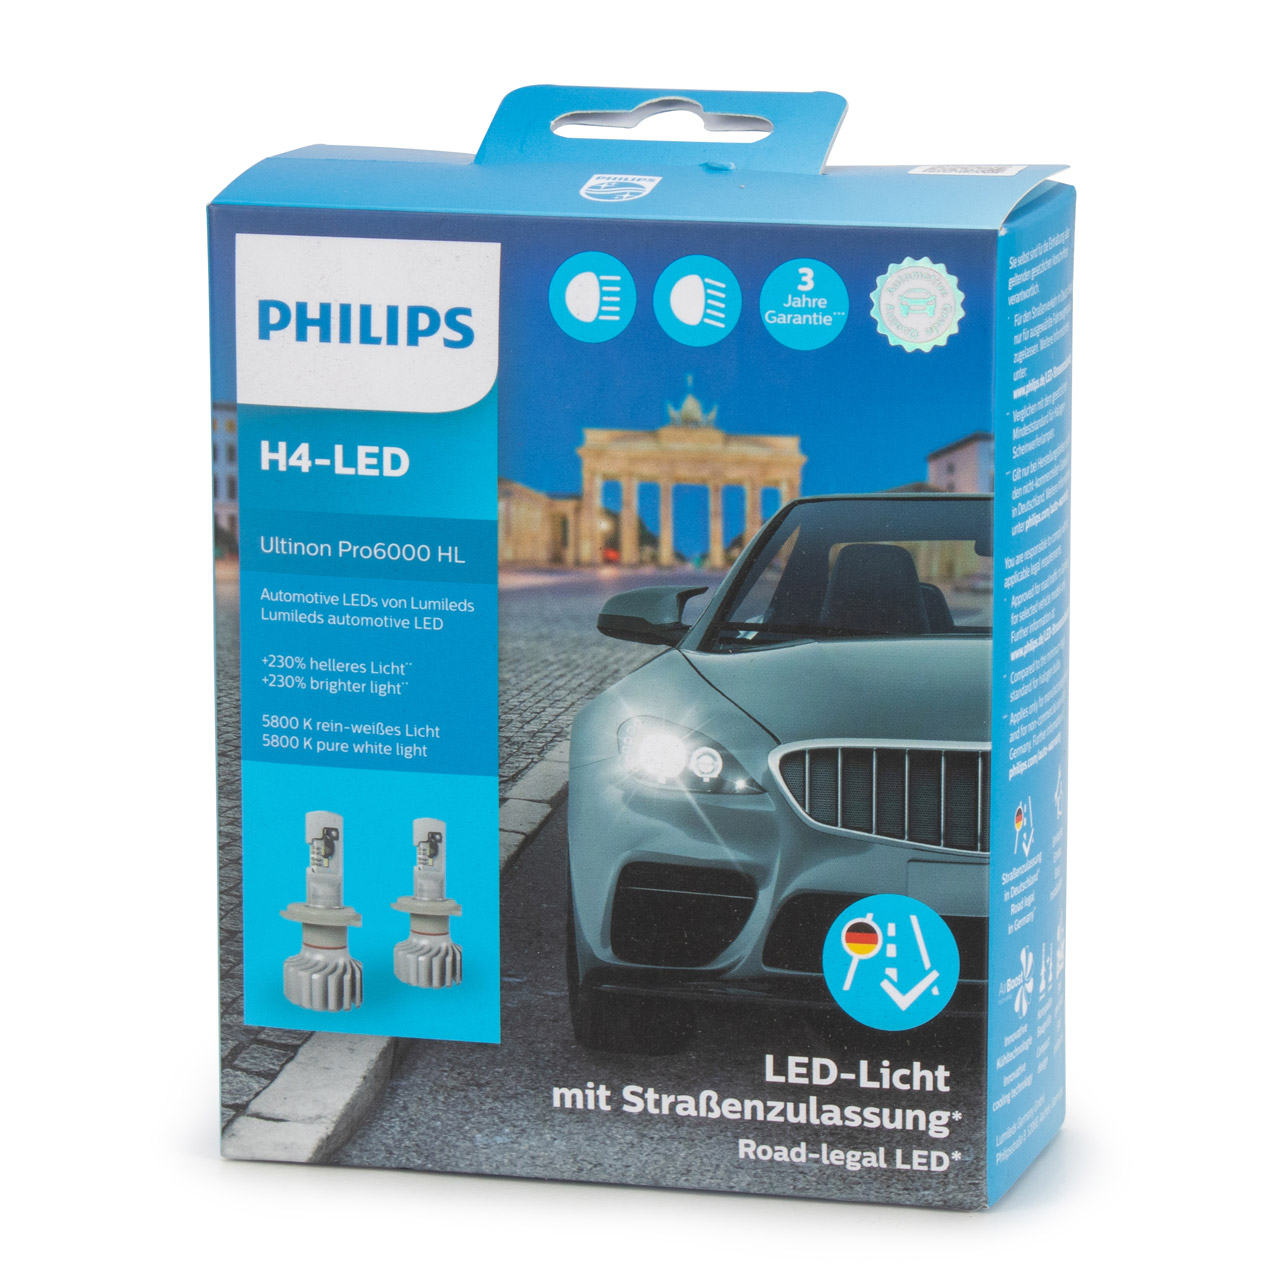 Original Philips Ultinon Pro6000 H4 LED LED mit Straßenzulassung 12V +230%  Birne Lampe 